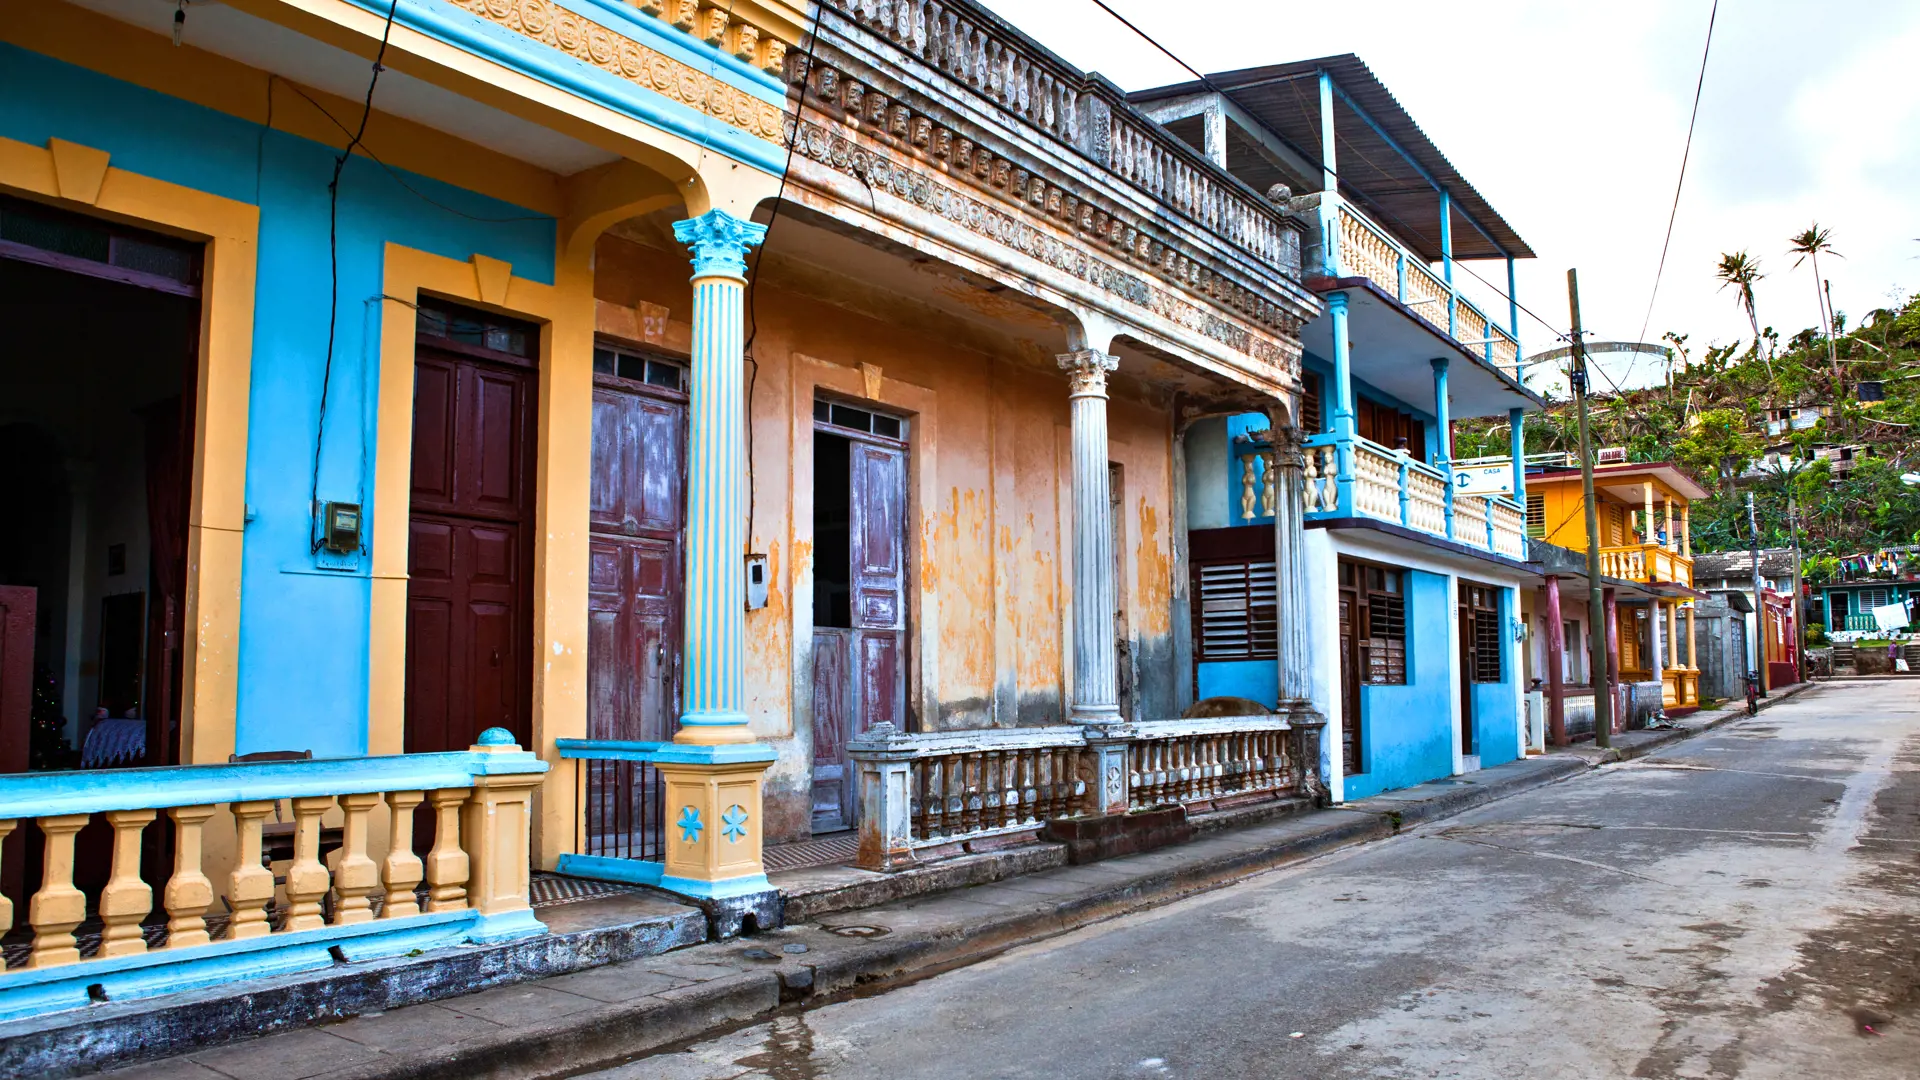 shutterstock_597131270 Old colorful houses in Baracoa, Cuba.jpg